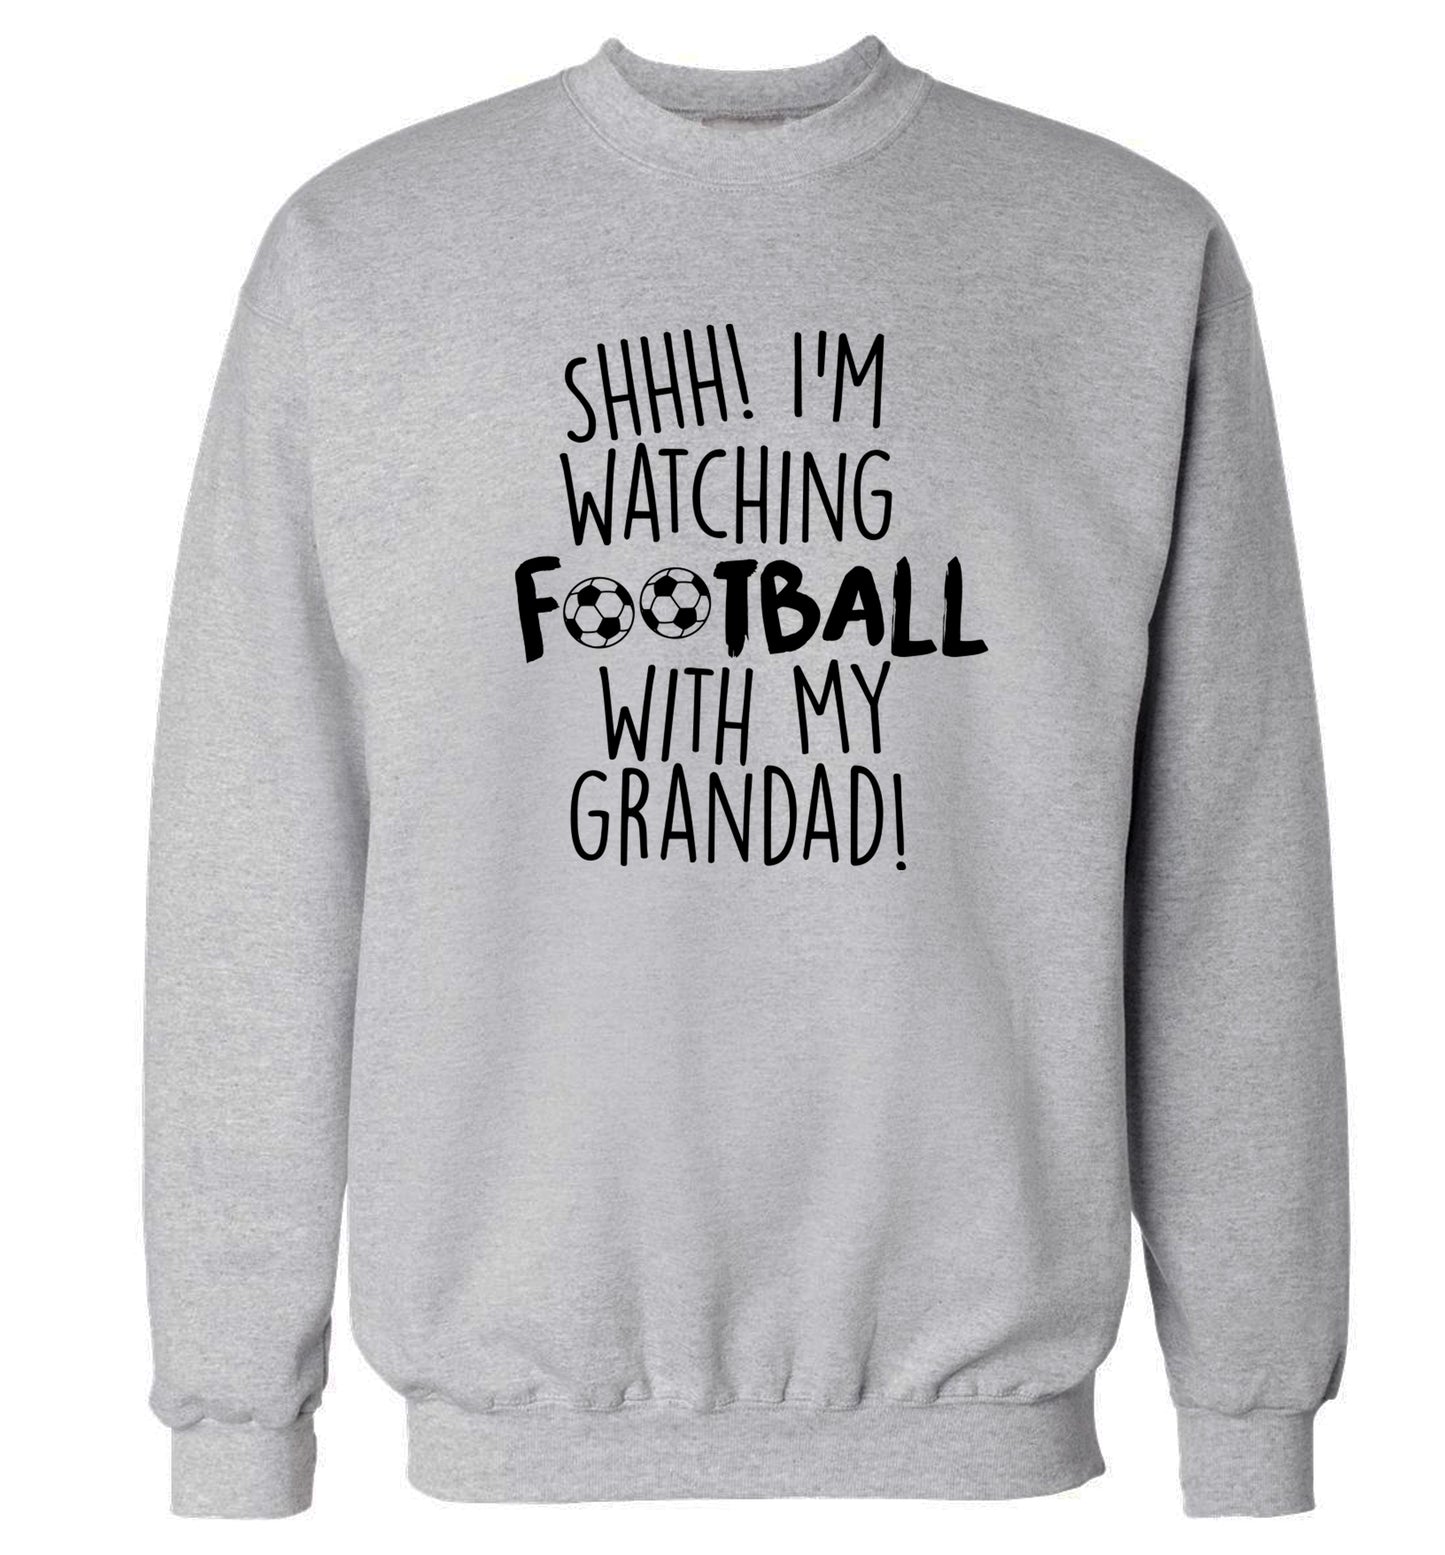 Shhh I'm watching football with my grandad Adult's unisexgrey Sweater 2XL